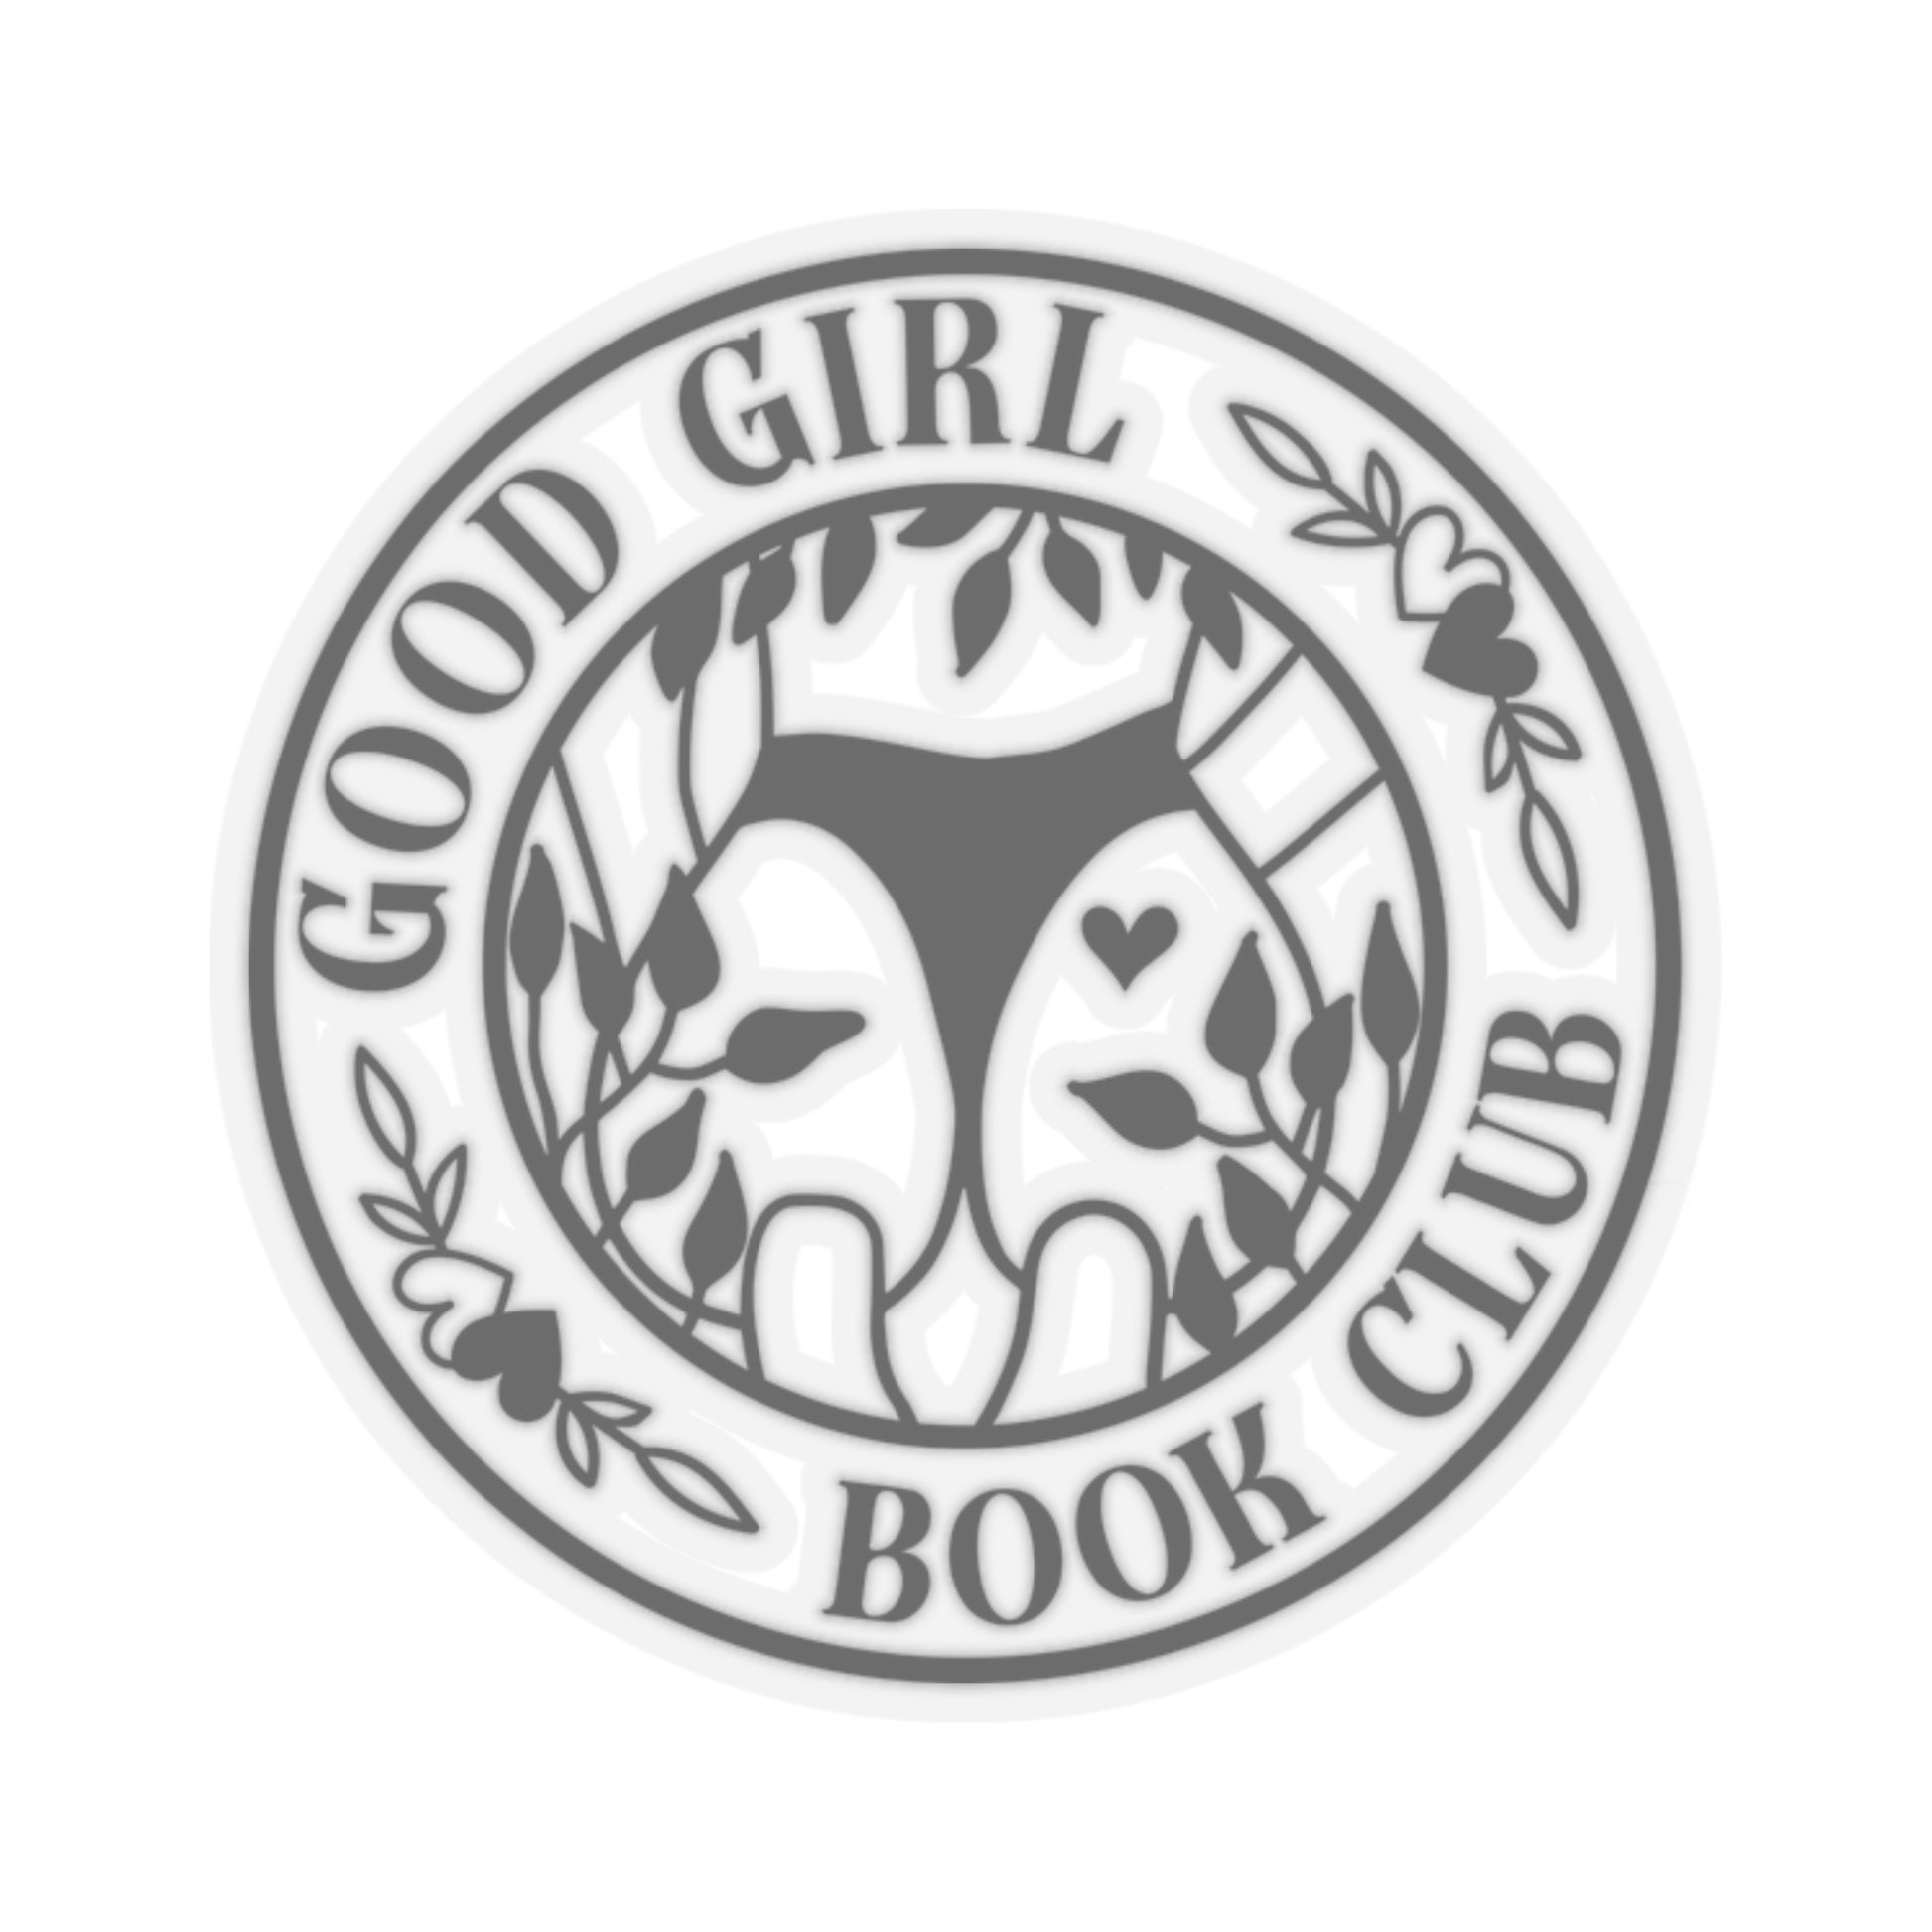 Good Girl Vinyl Sticker Decal Adult Content Smut Romance Books